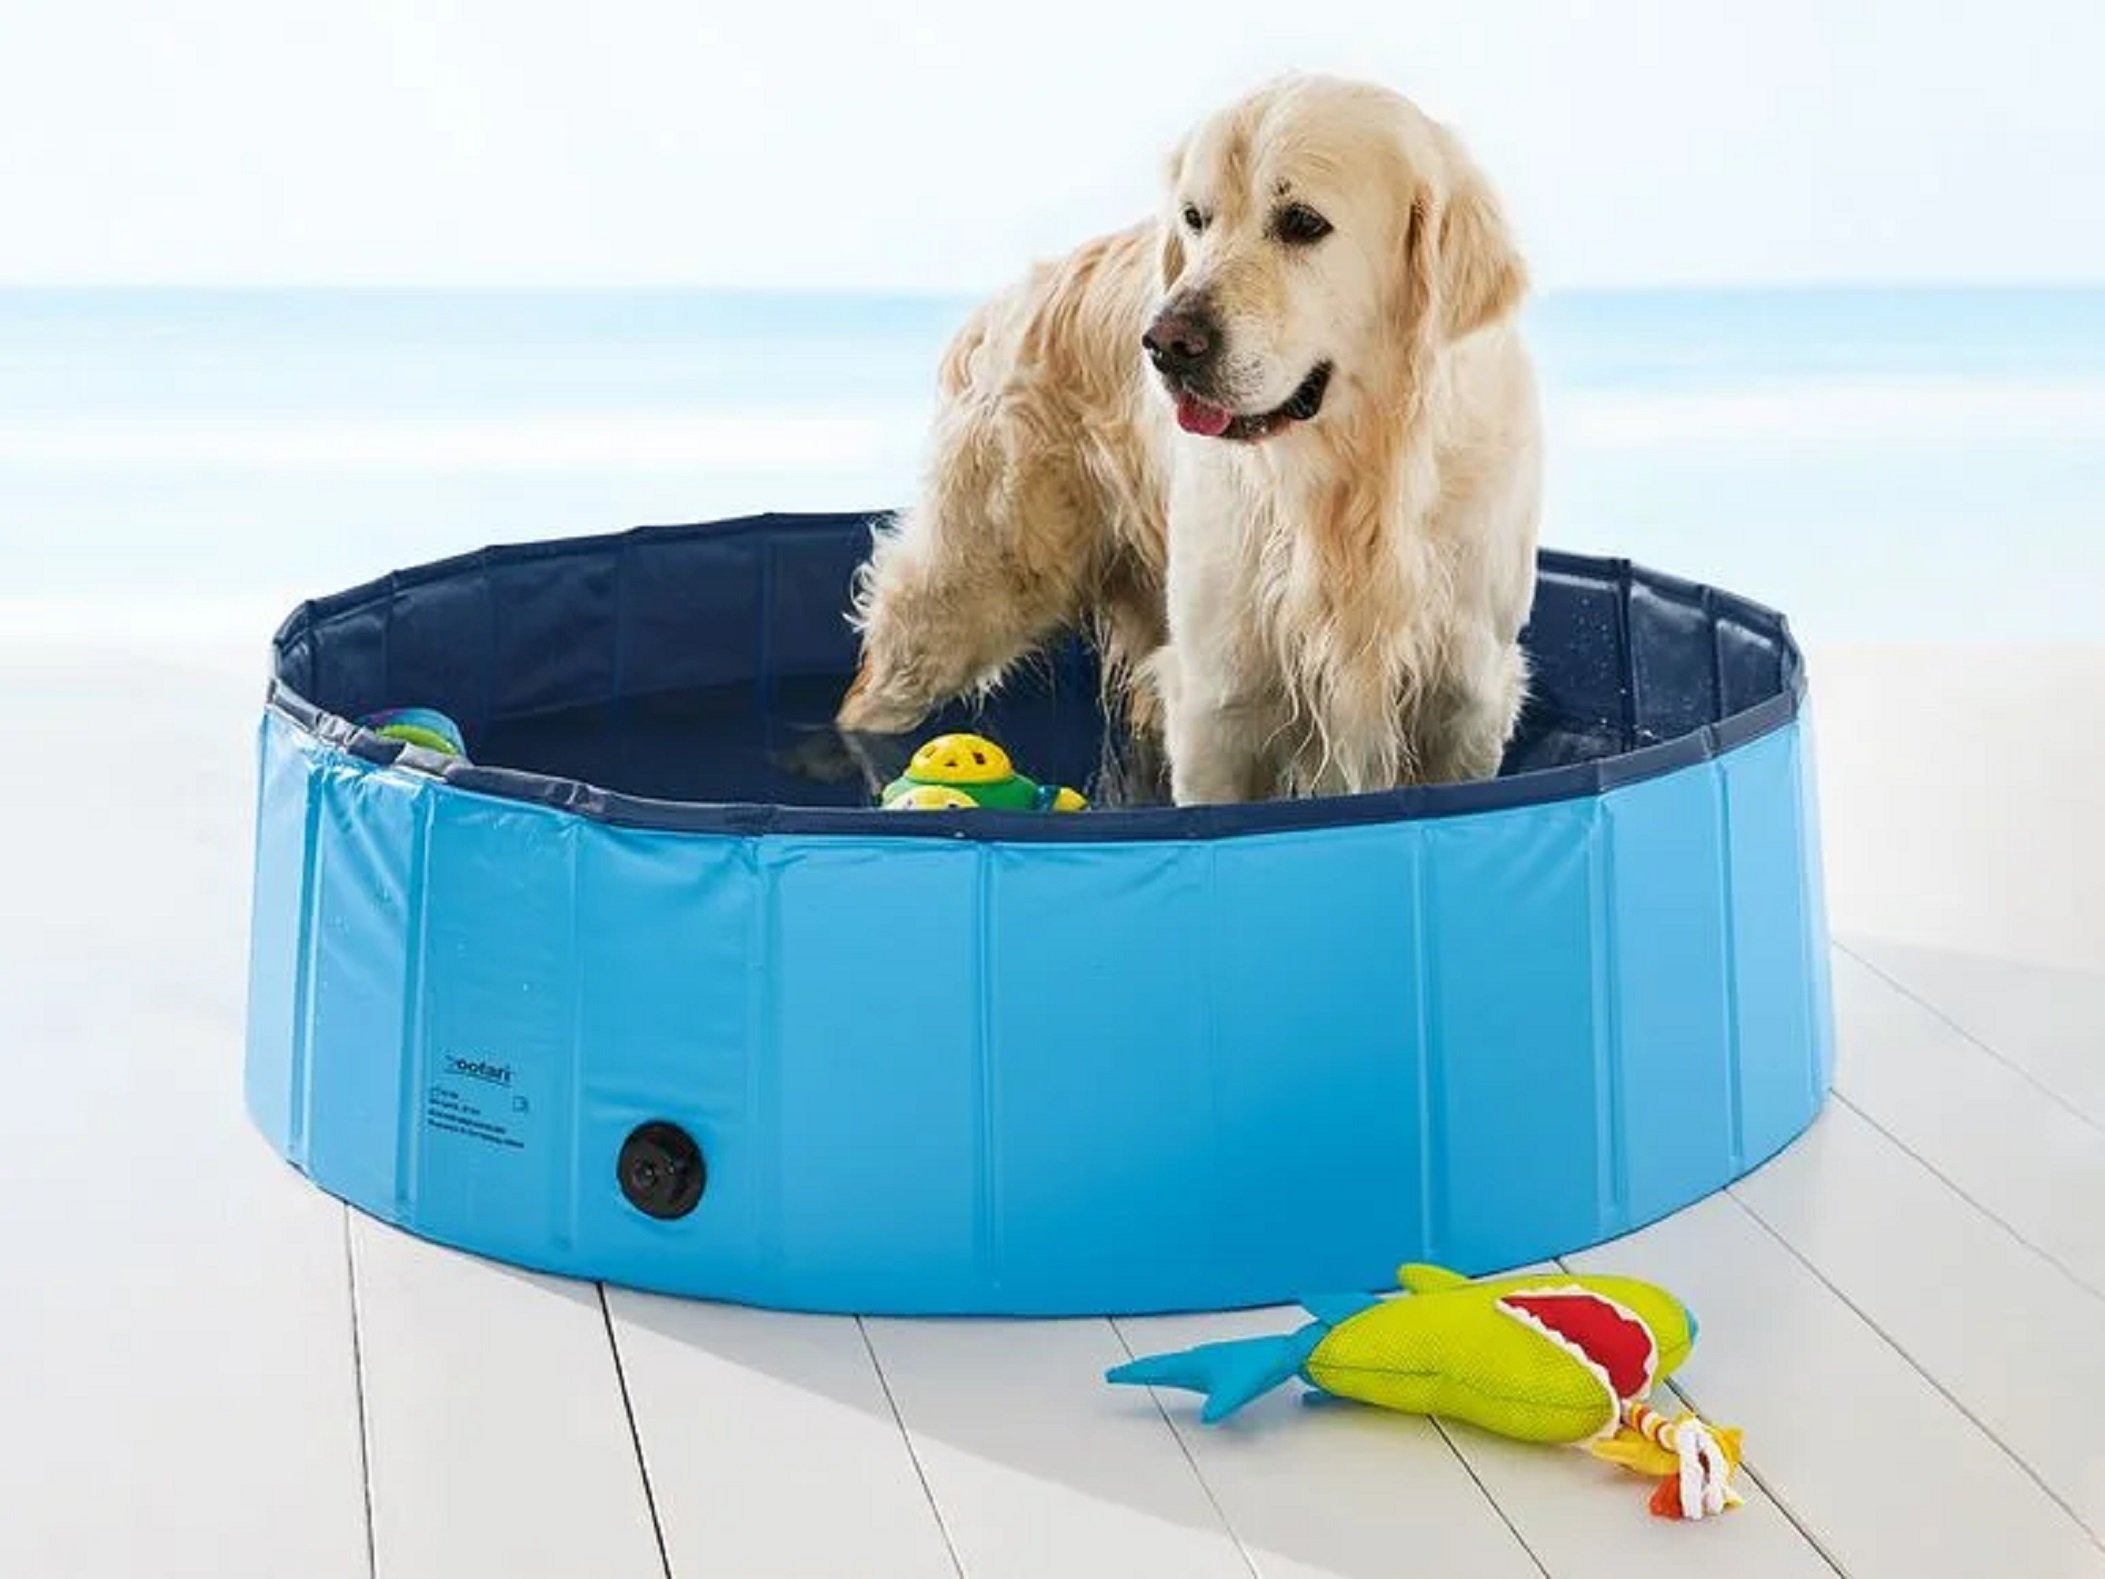 La piscina plegable para perros de Lidl para refrescar a tu mascota este verano